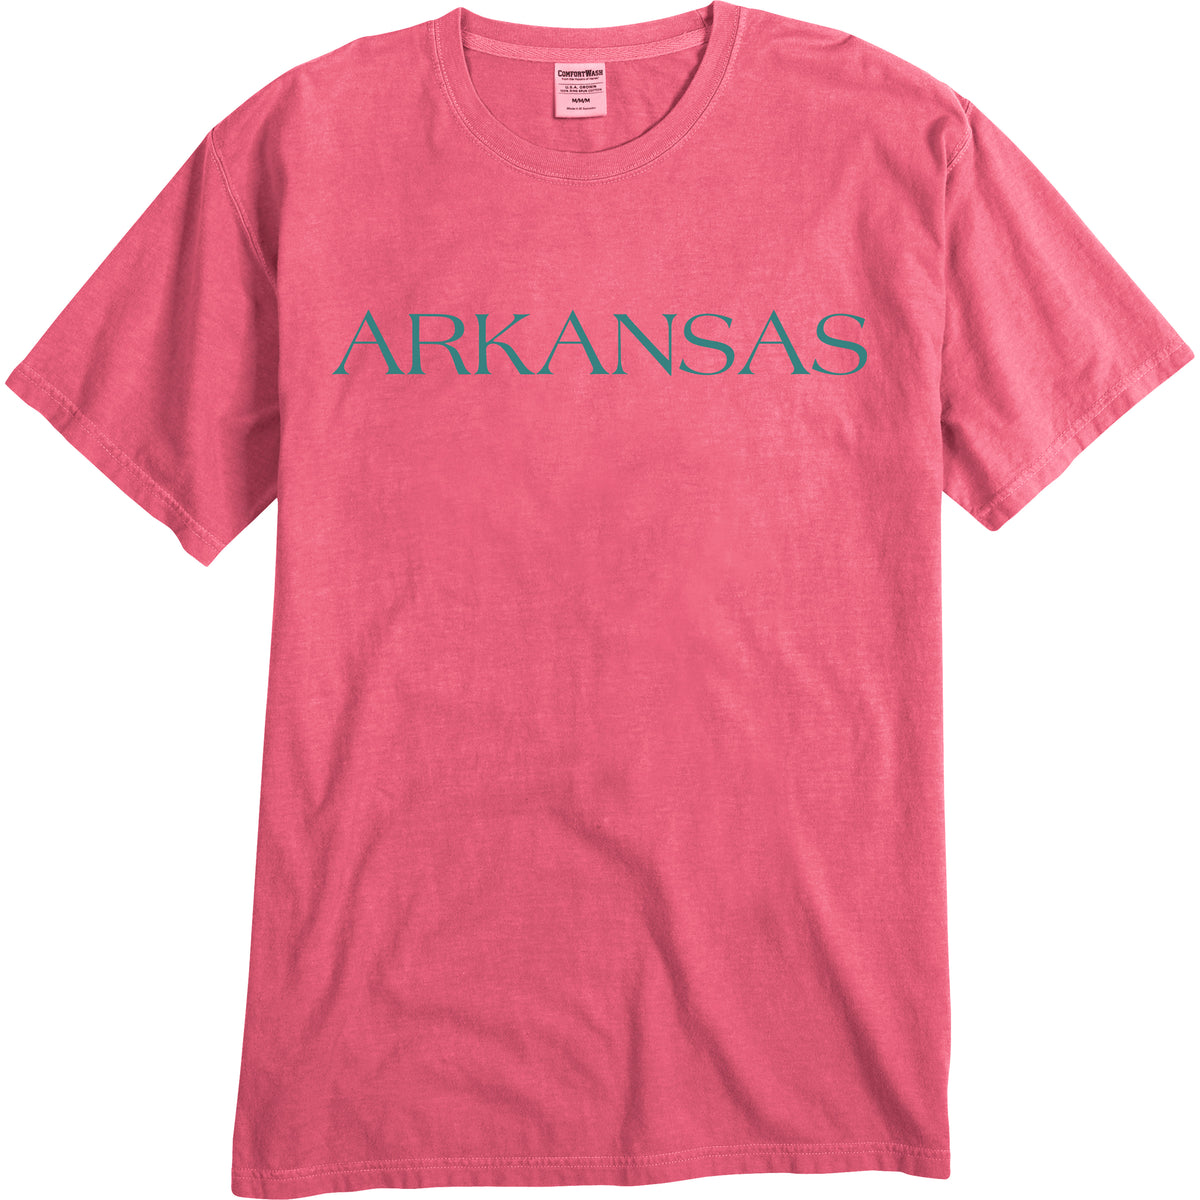 By The Sea Arkansas Watermelon/Mint T-Shirt